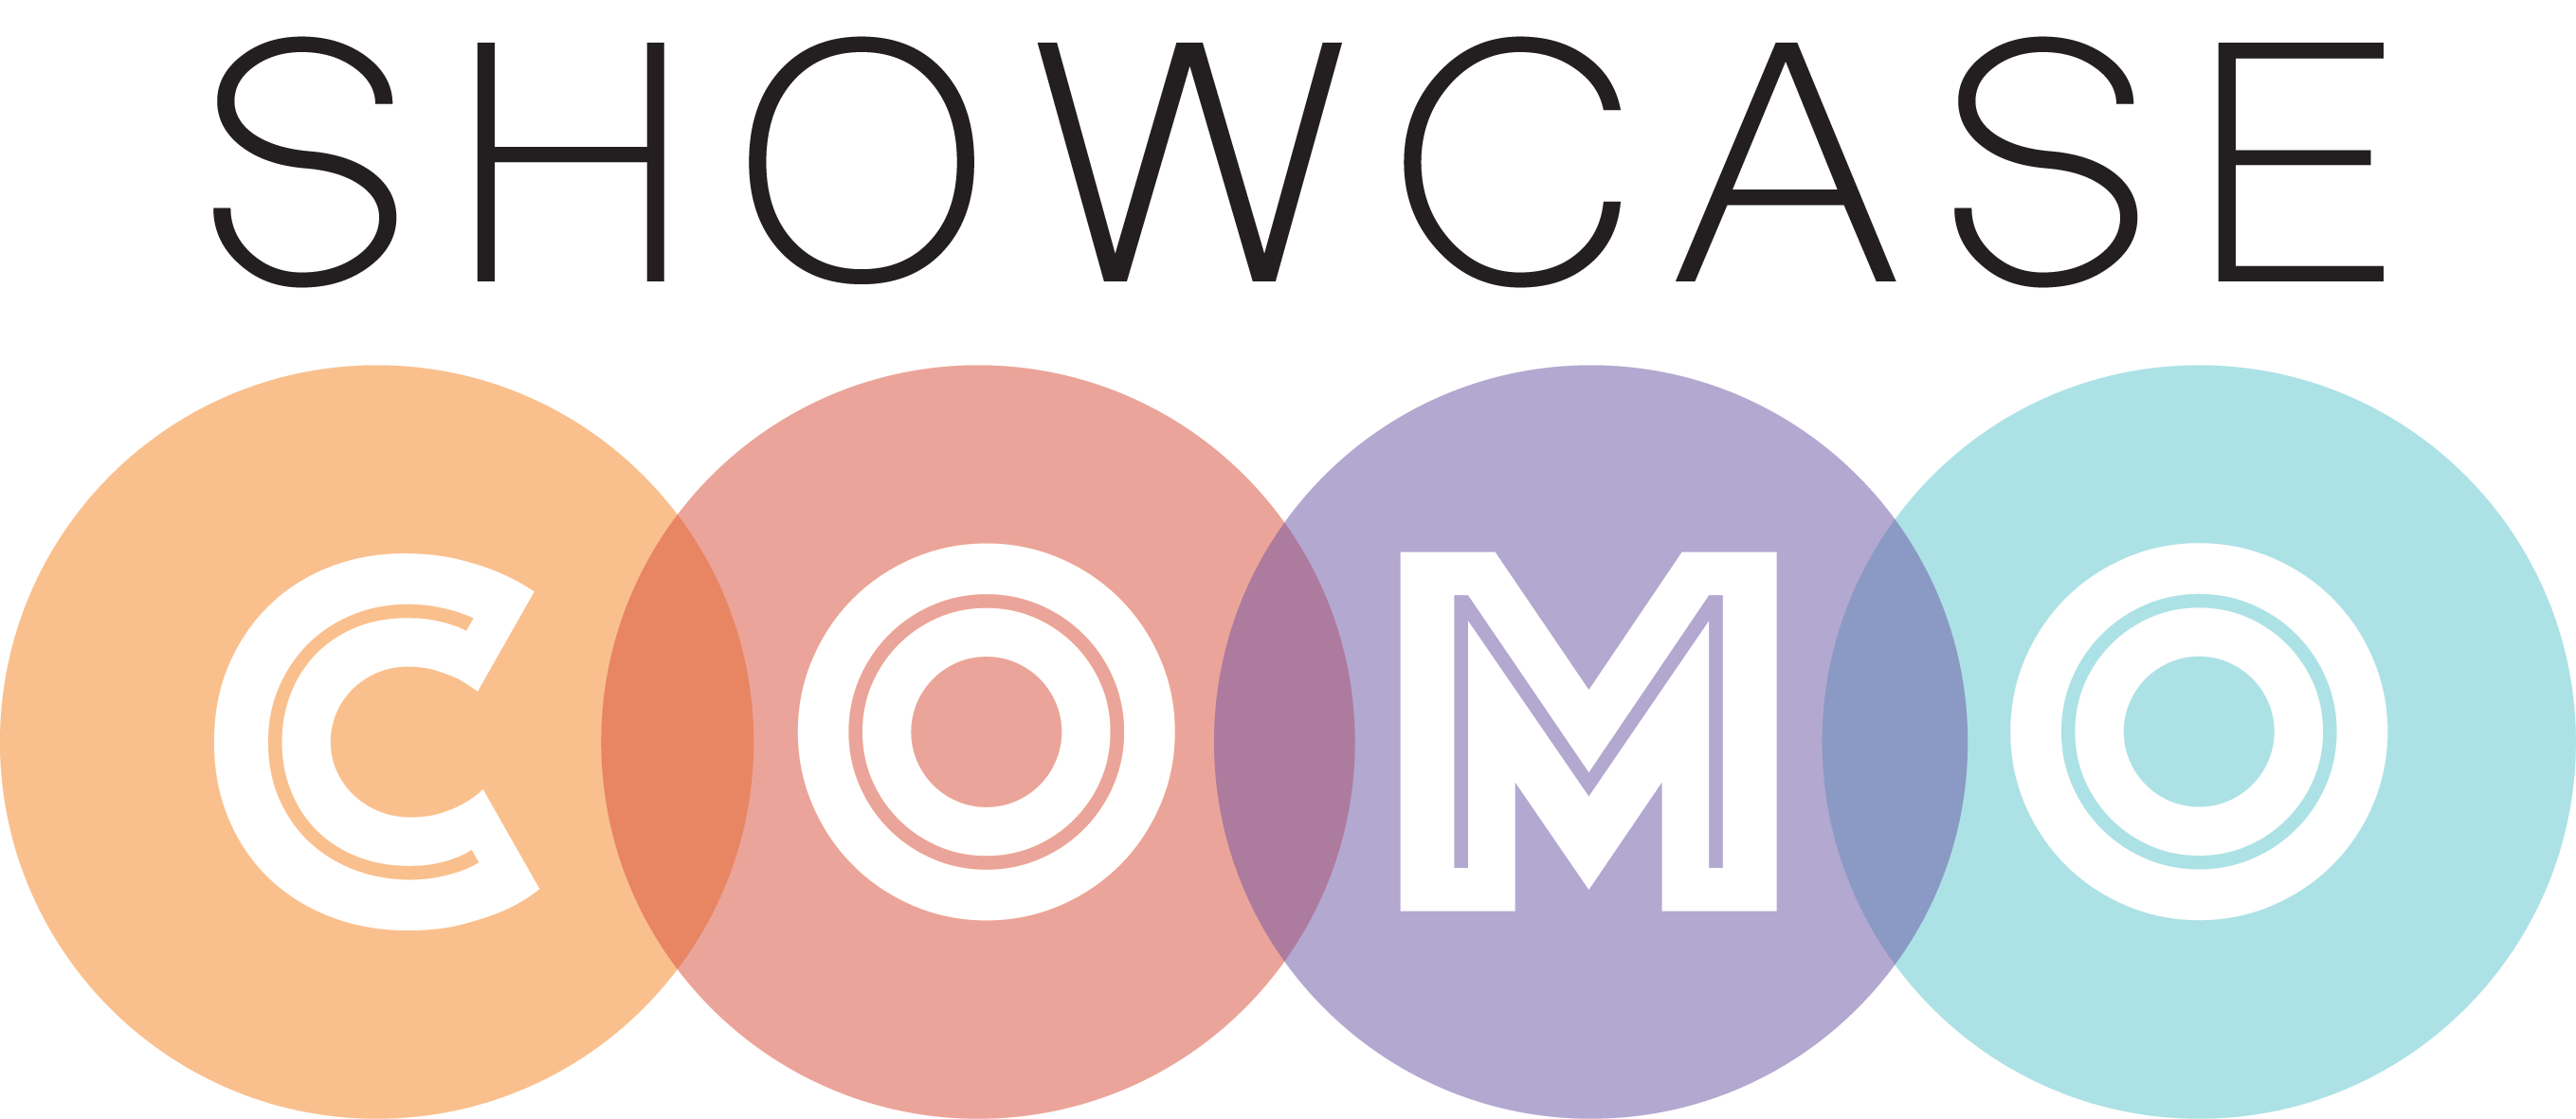 Como Logo - Showcase CoMo Logo - Columbia, Missouri Chamber of Commerce